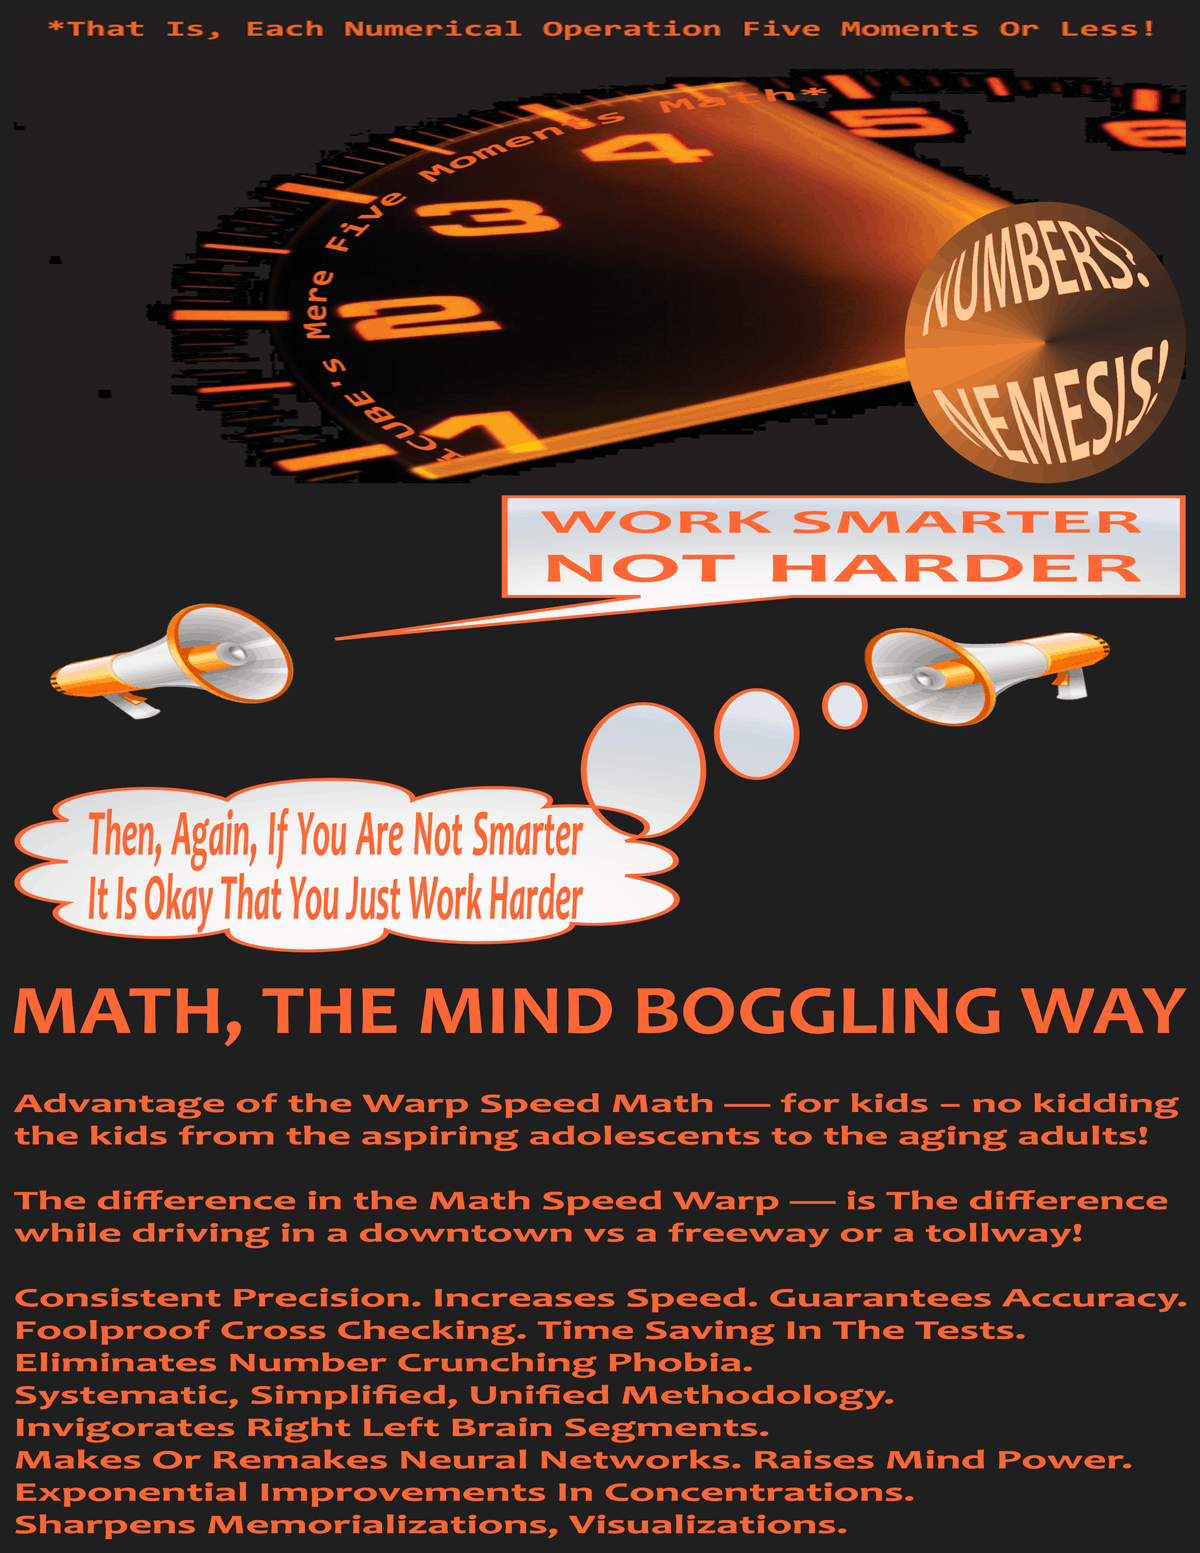 numbers-nemesis-warp-speed-math-the-mind-boggling-way